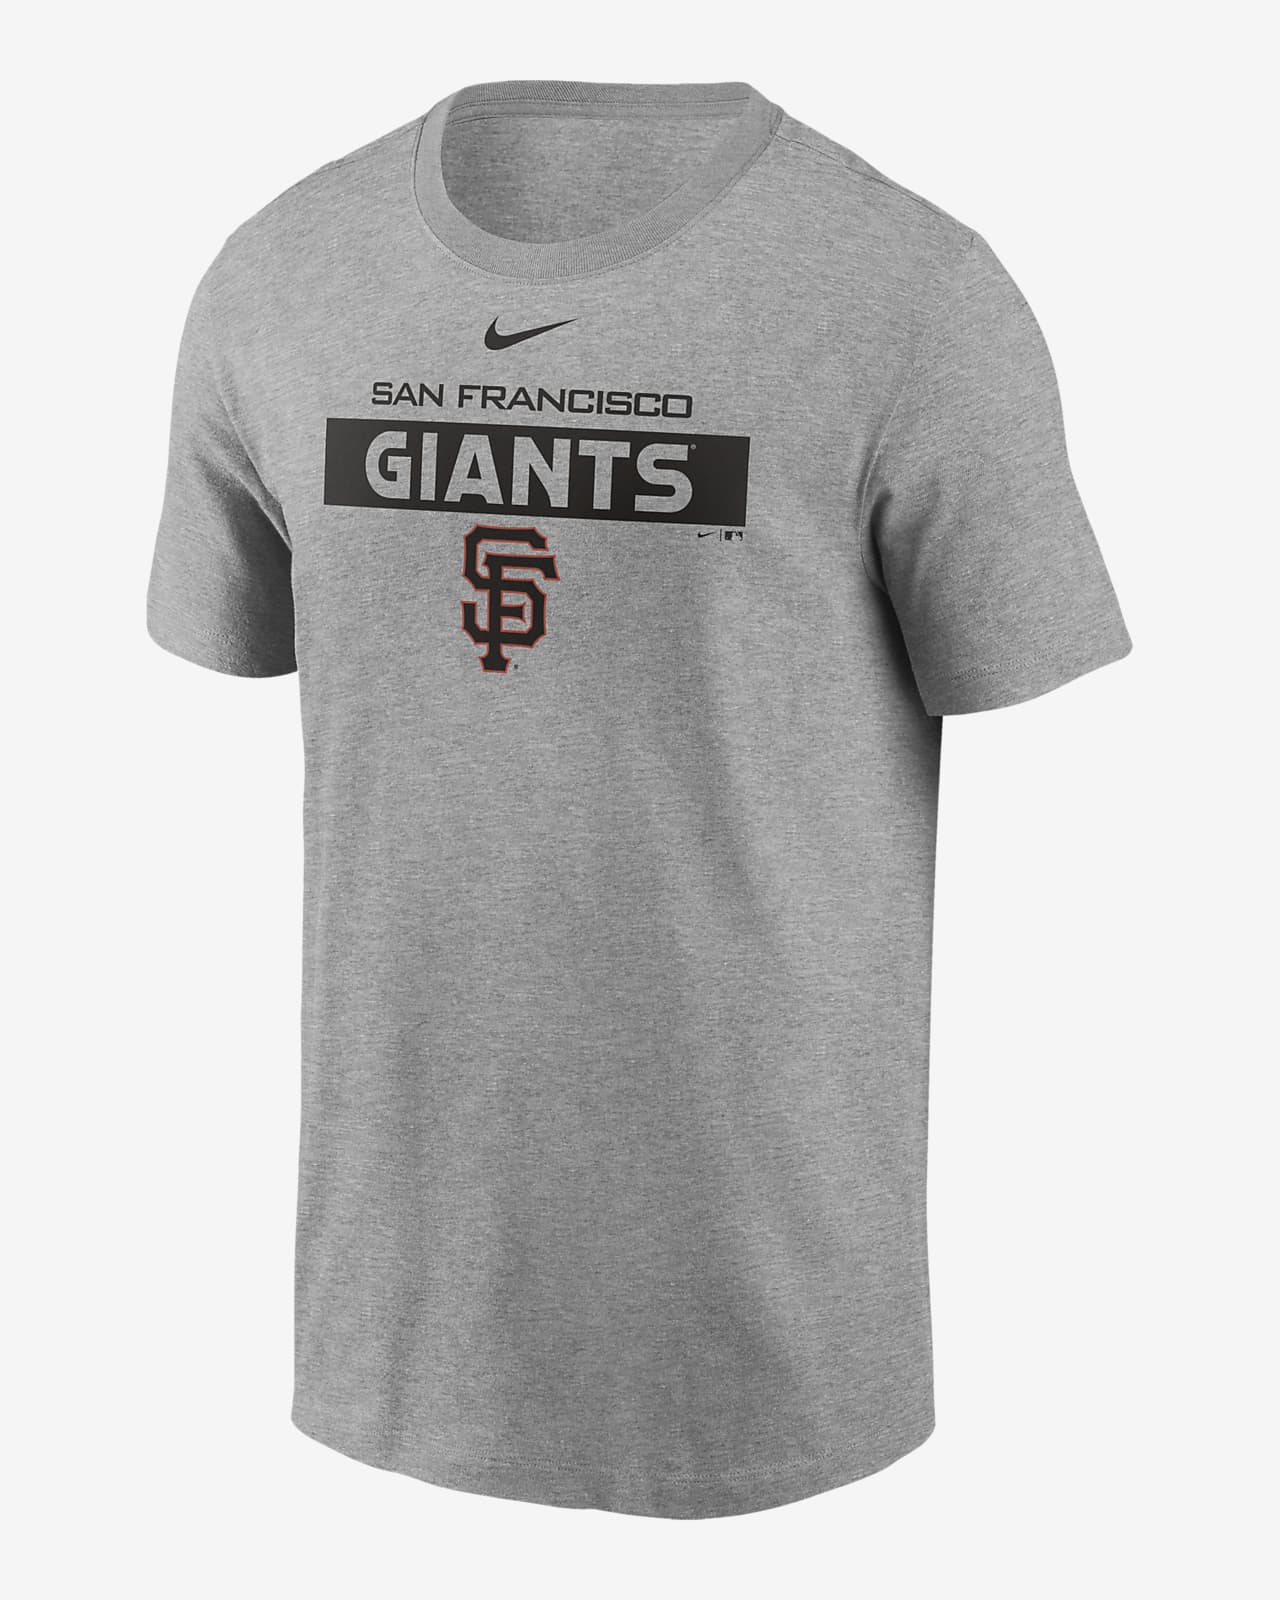 SAN FRANCISCO T-shirt SF Baseball California Tee 100% Cotton Mens XL New